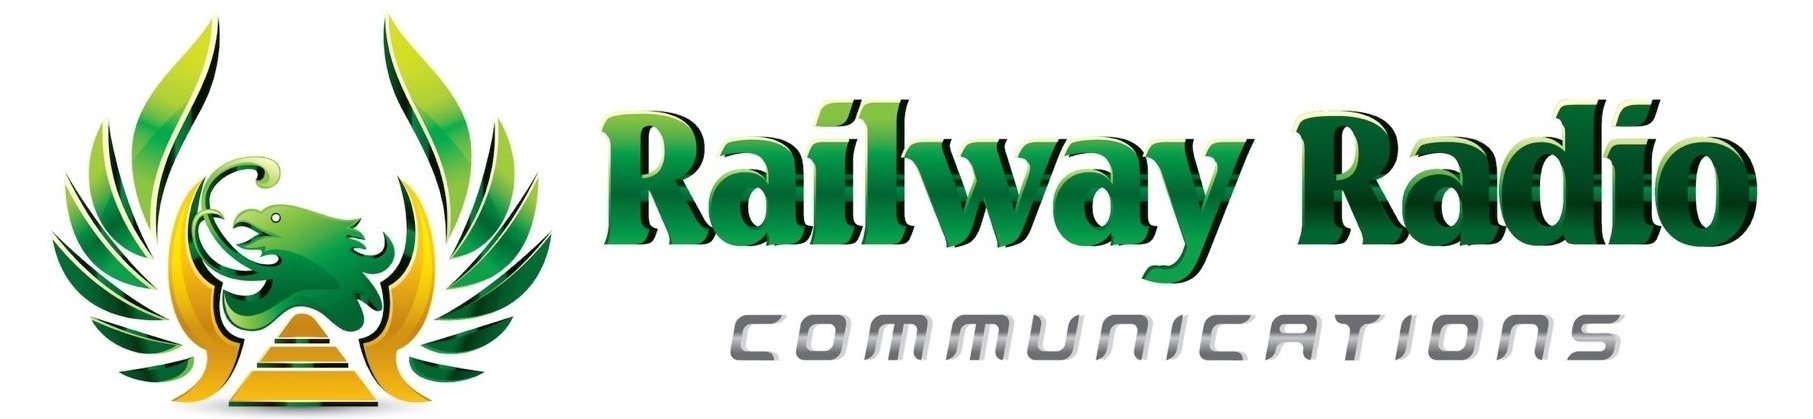 Railway Radio